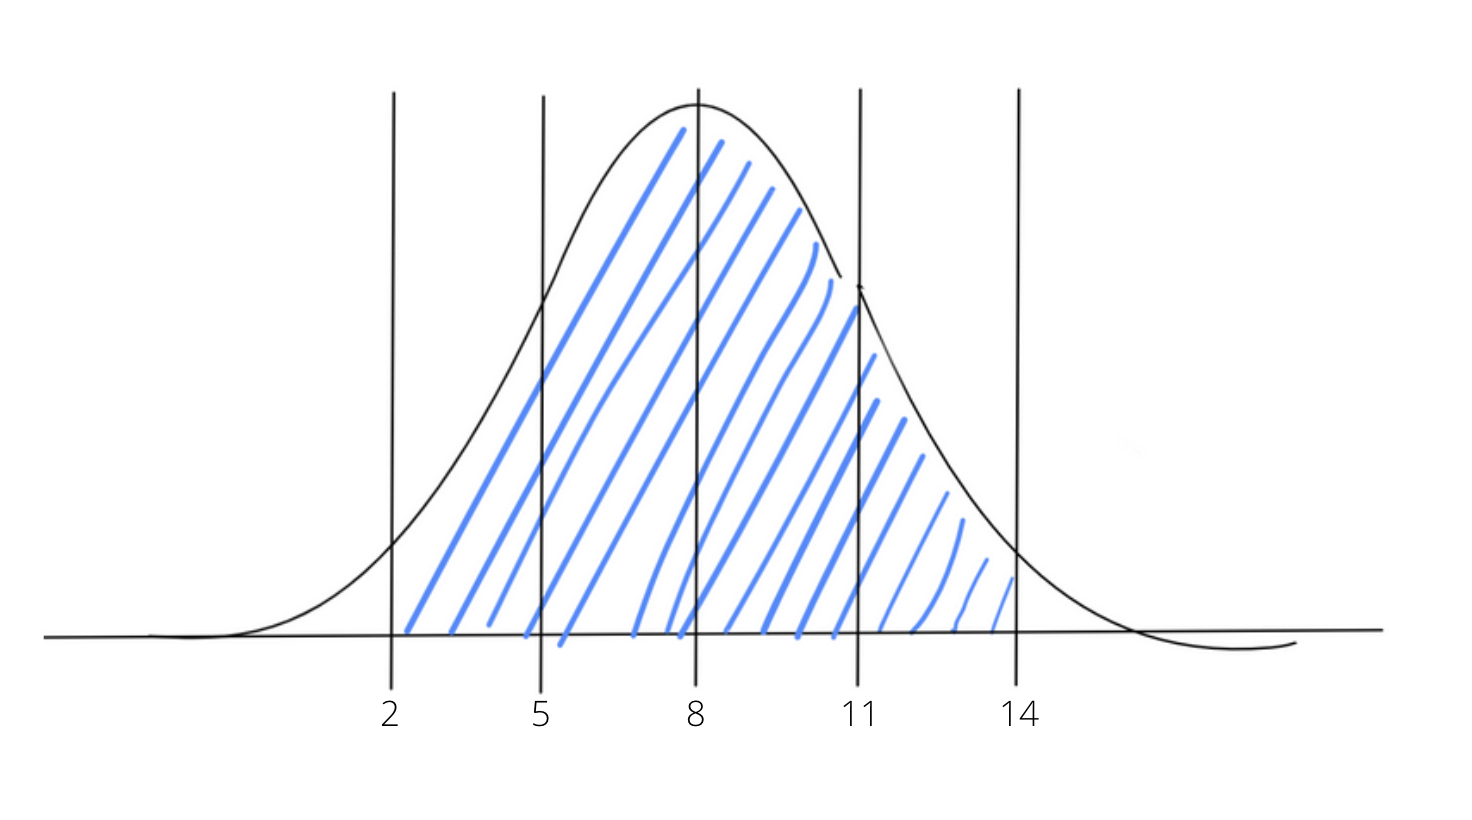 Normal distribution curve